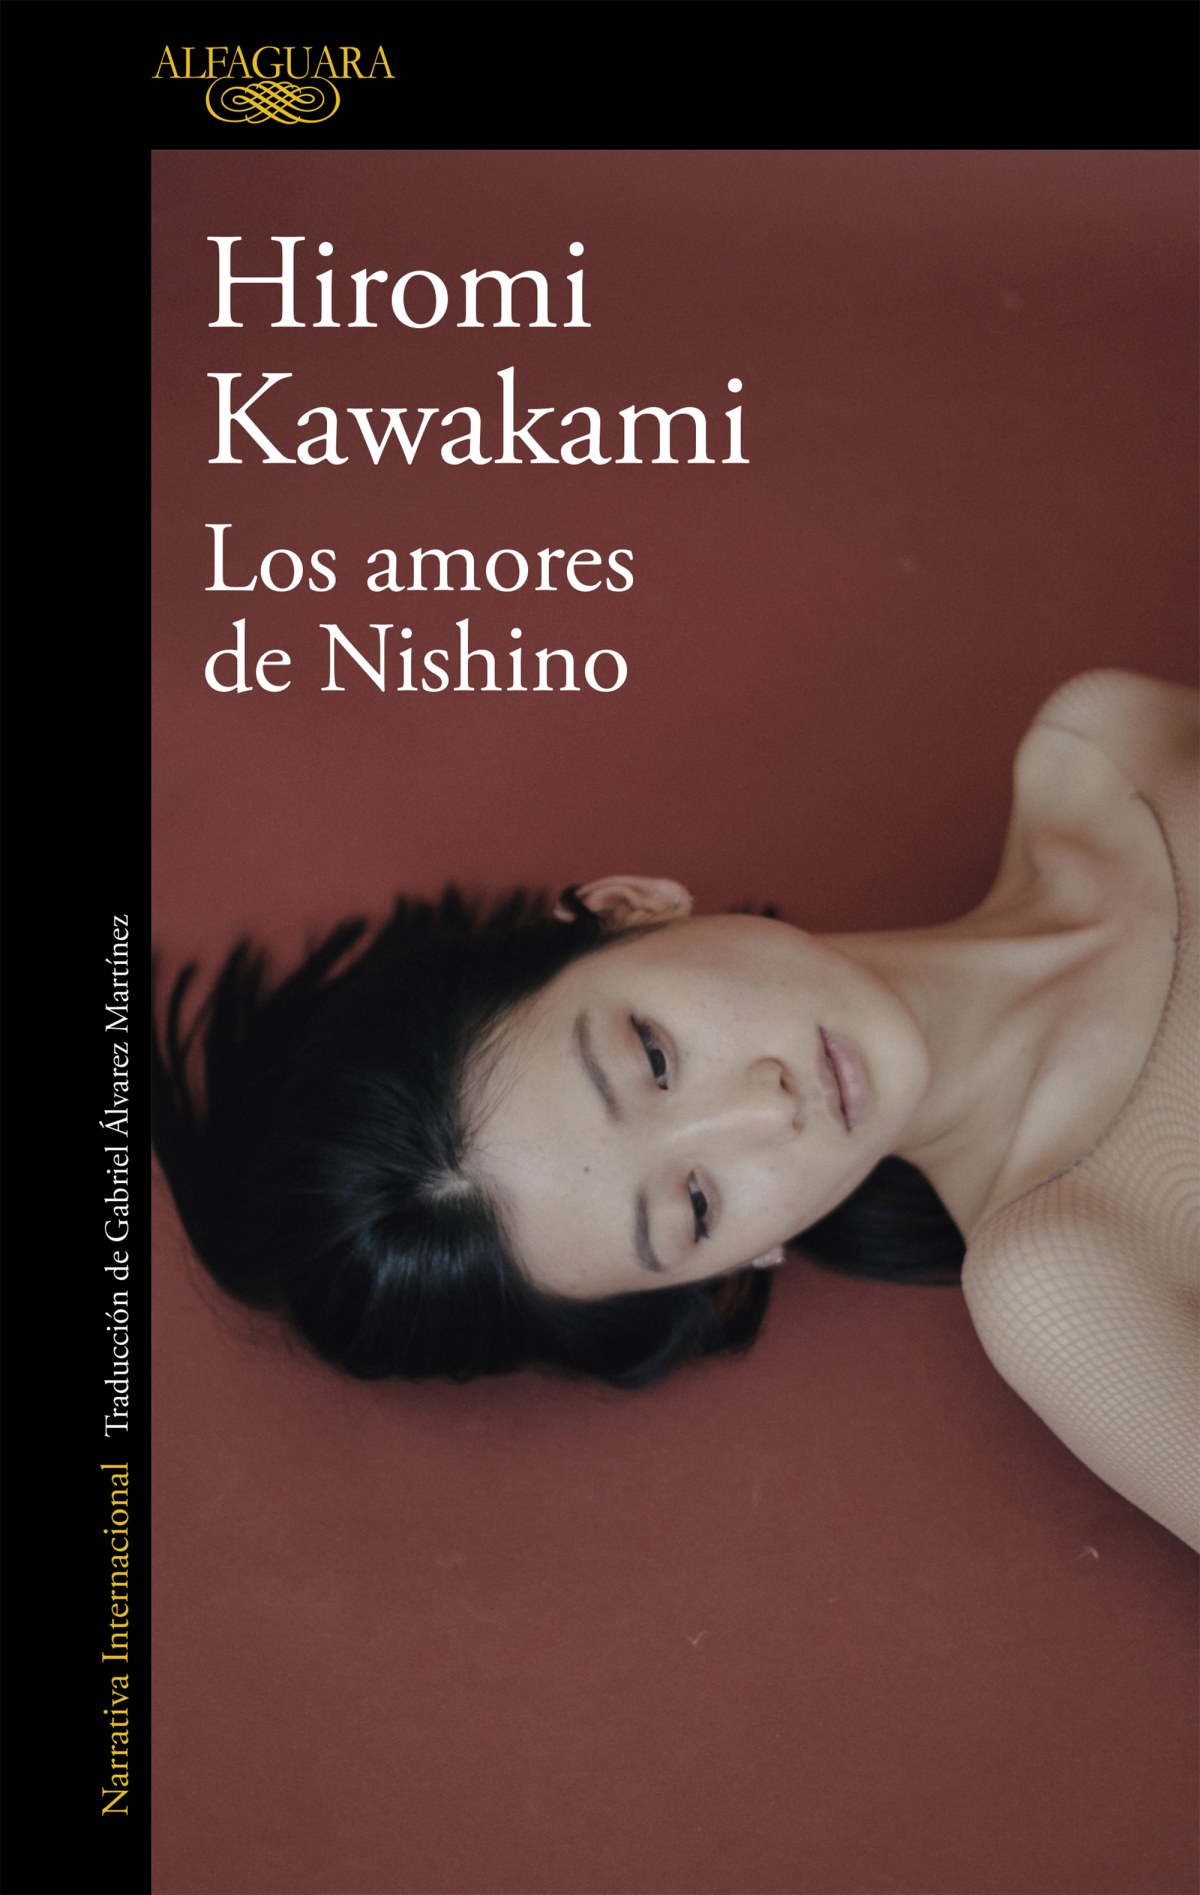 Los amores de nishino - Kawakami, Hiromi